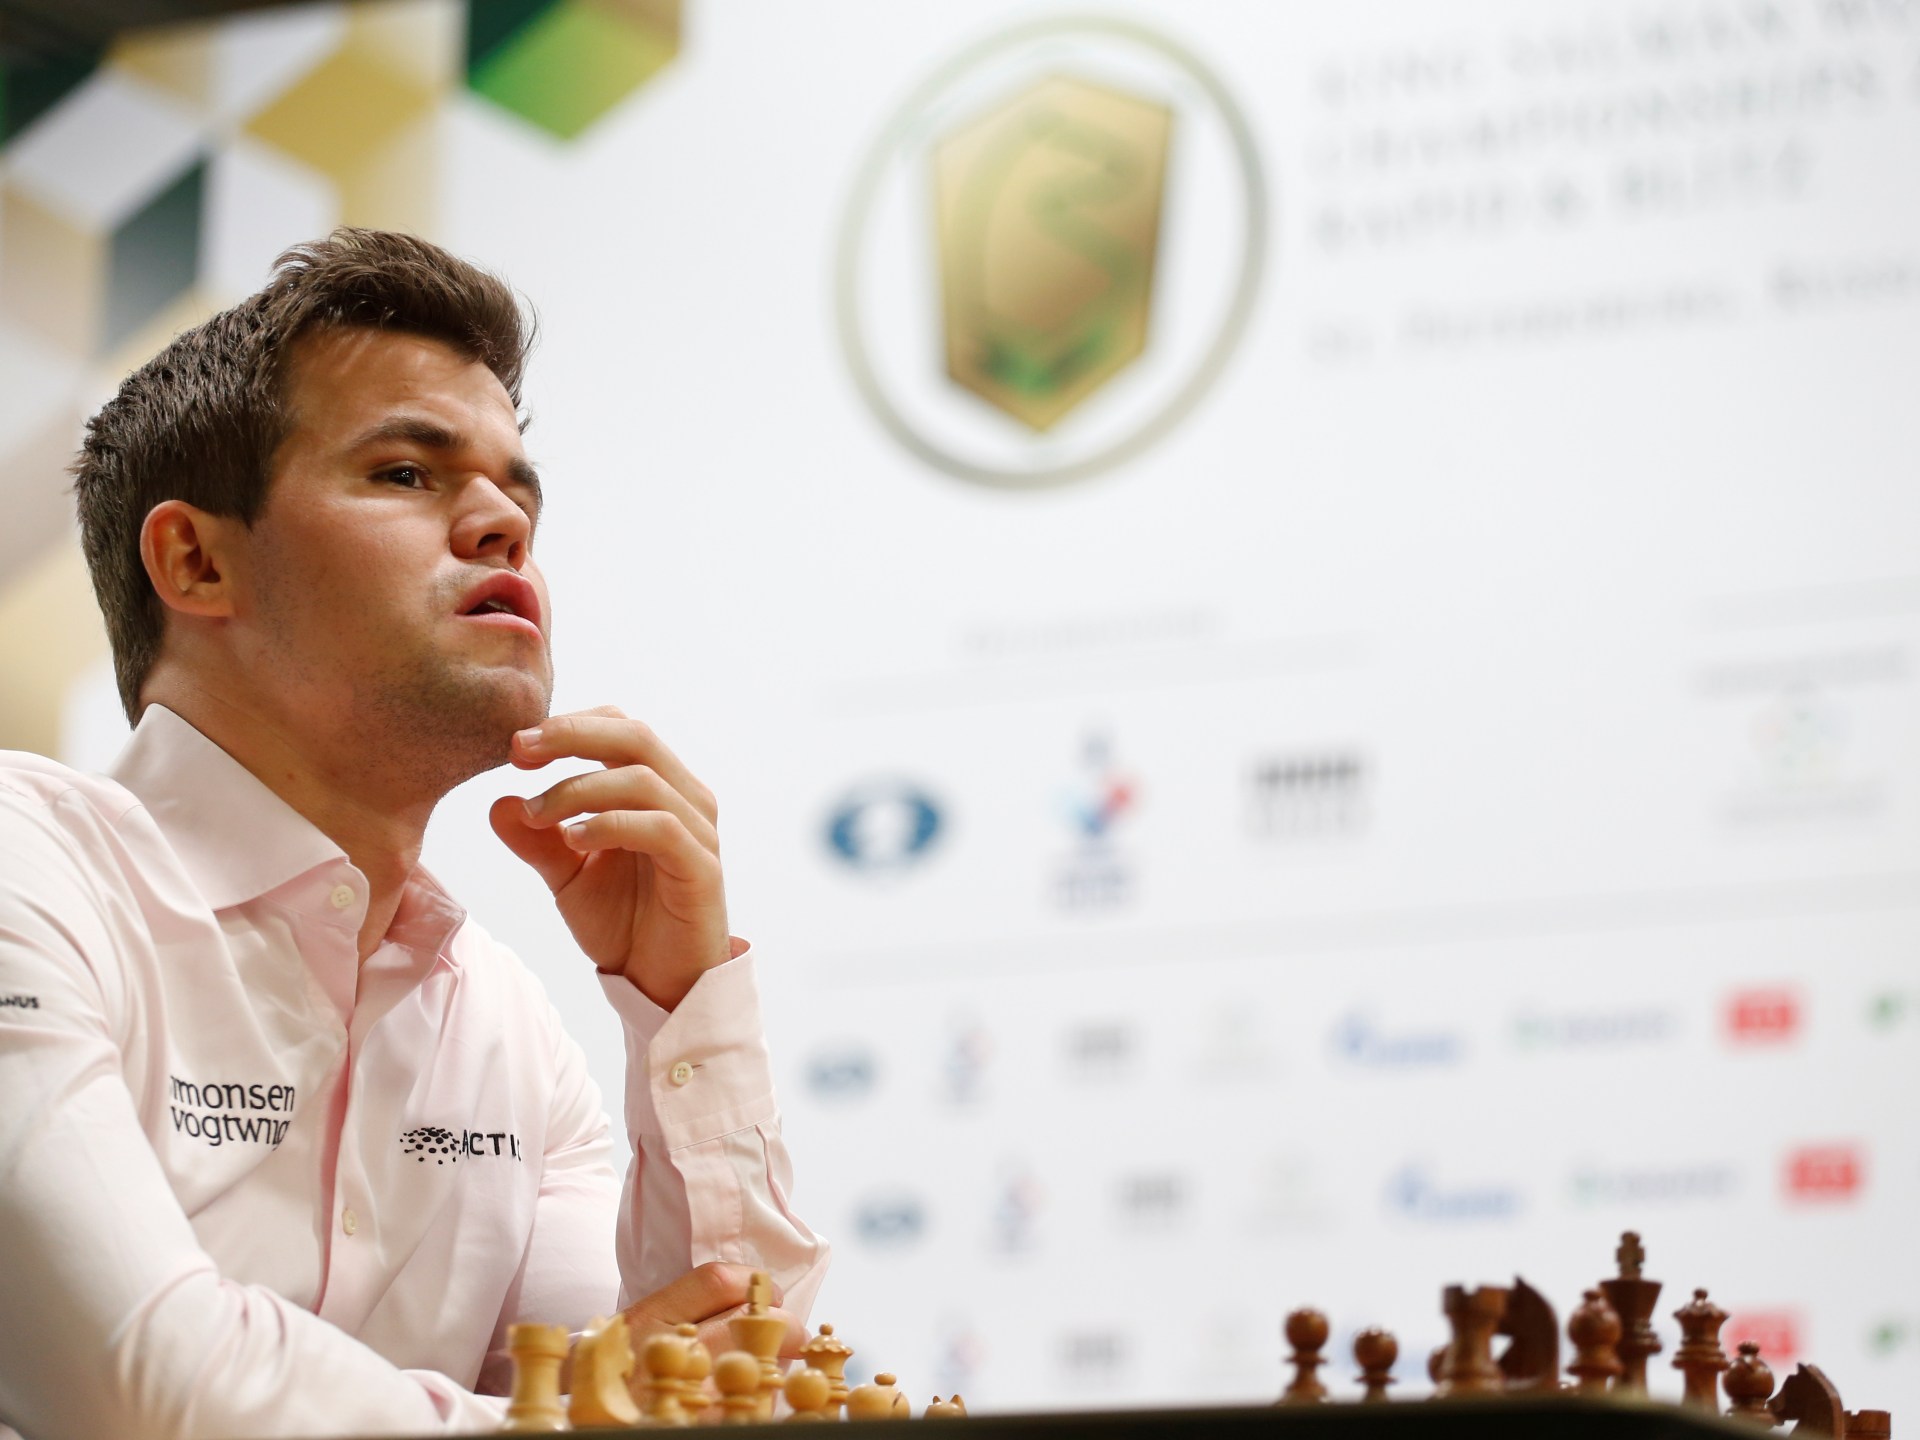 Chess champion Magnus Carlsen accuses Hans Niemann of cheating